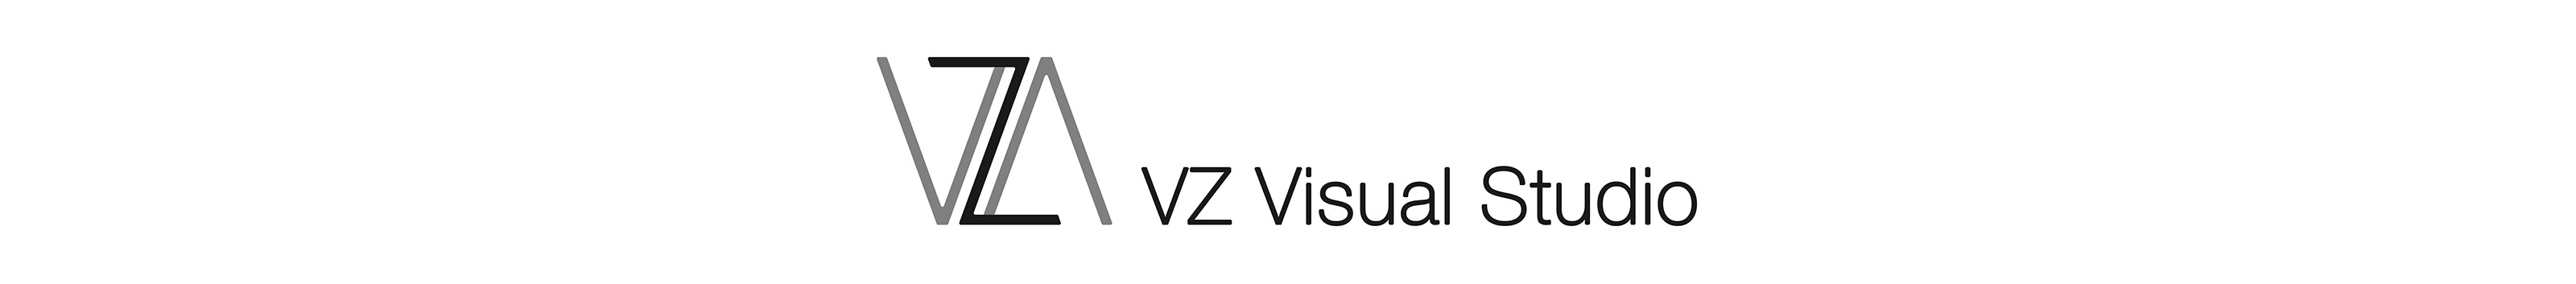 VZ Studio's profile banner